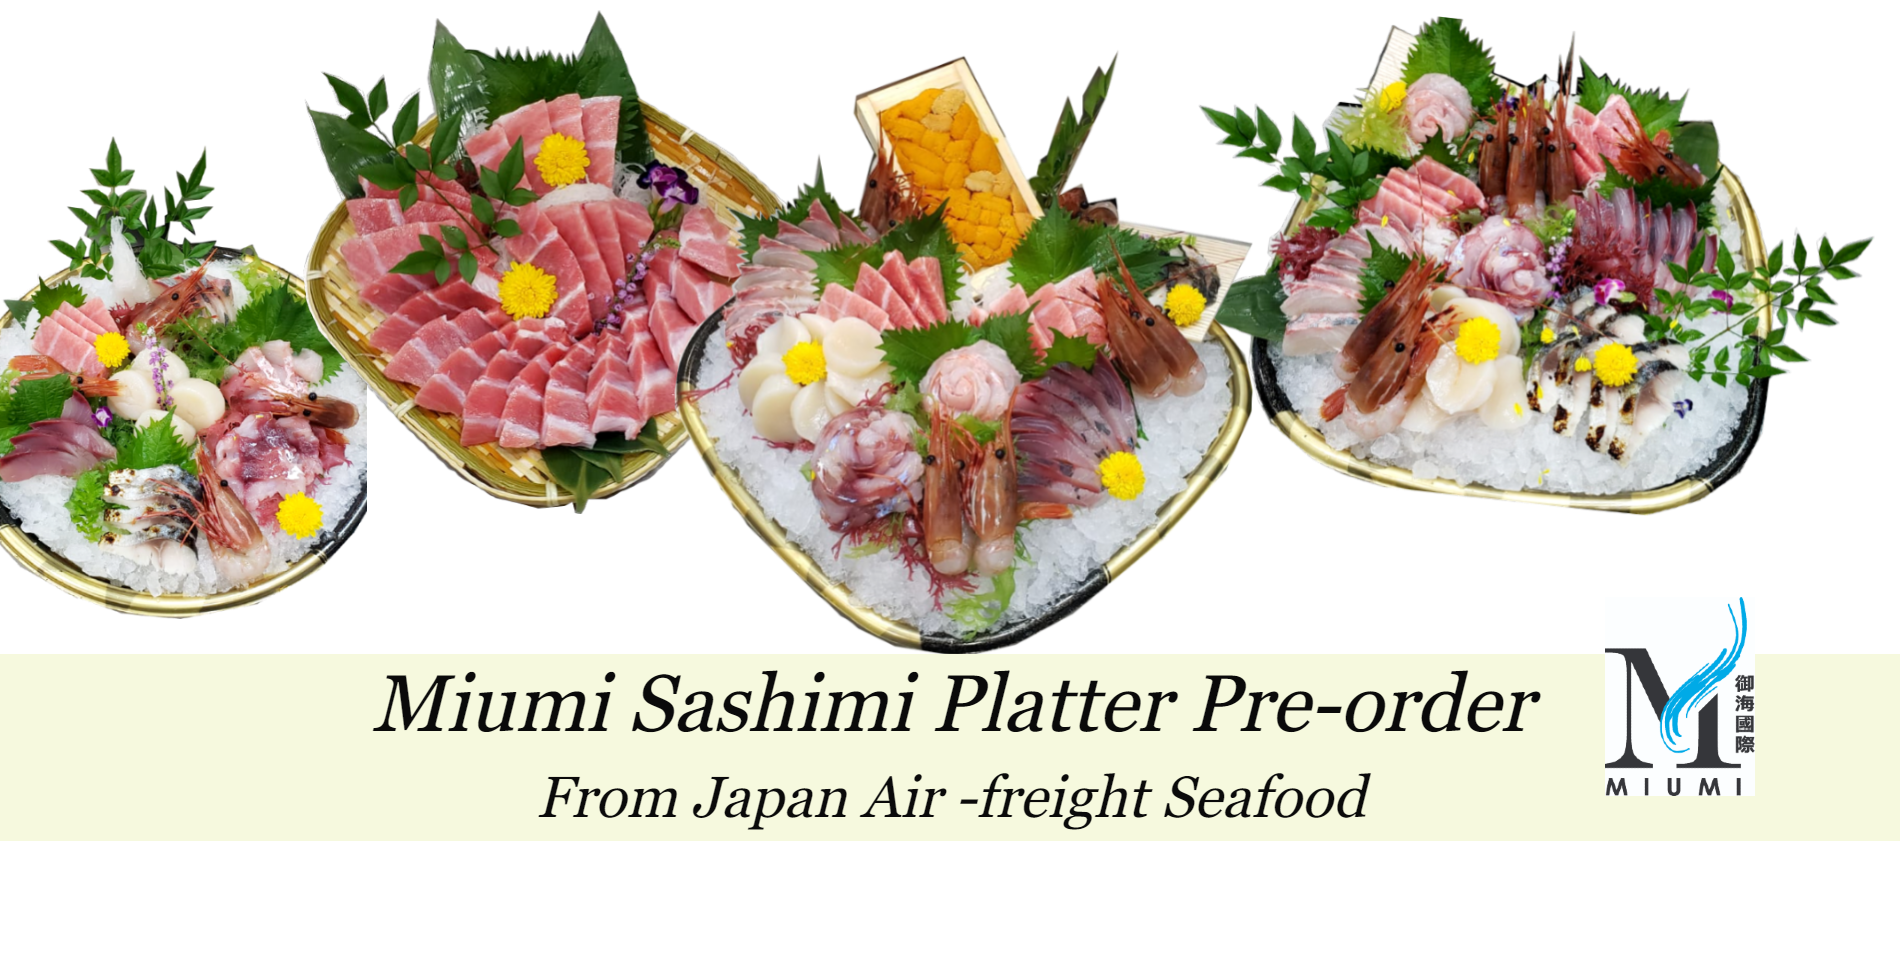 Miumi Sashimi Platter Pre-order